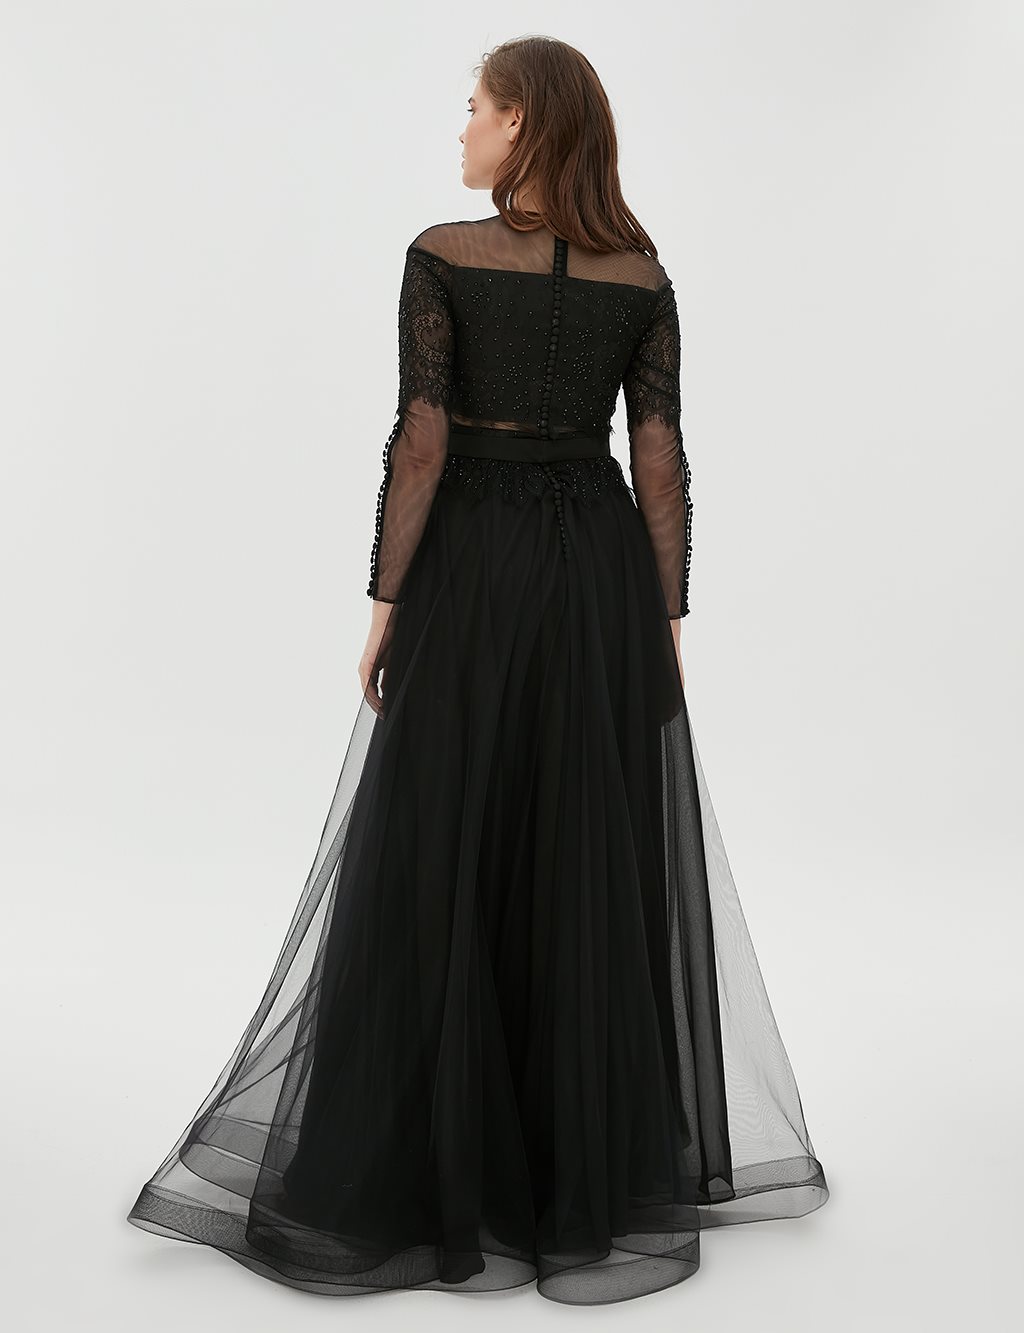 TIARA Organza Detailed Evening Gown B20 26132 Black